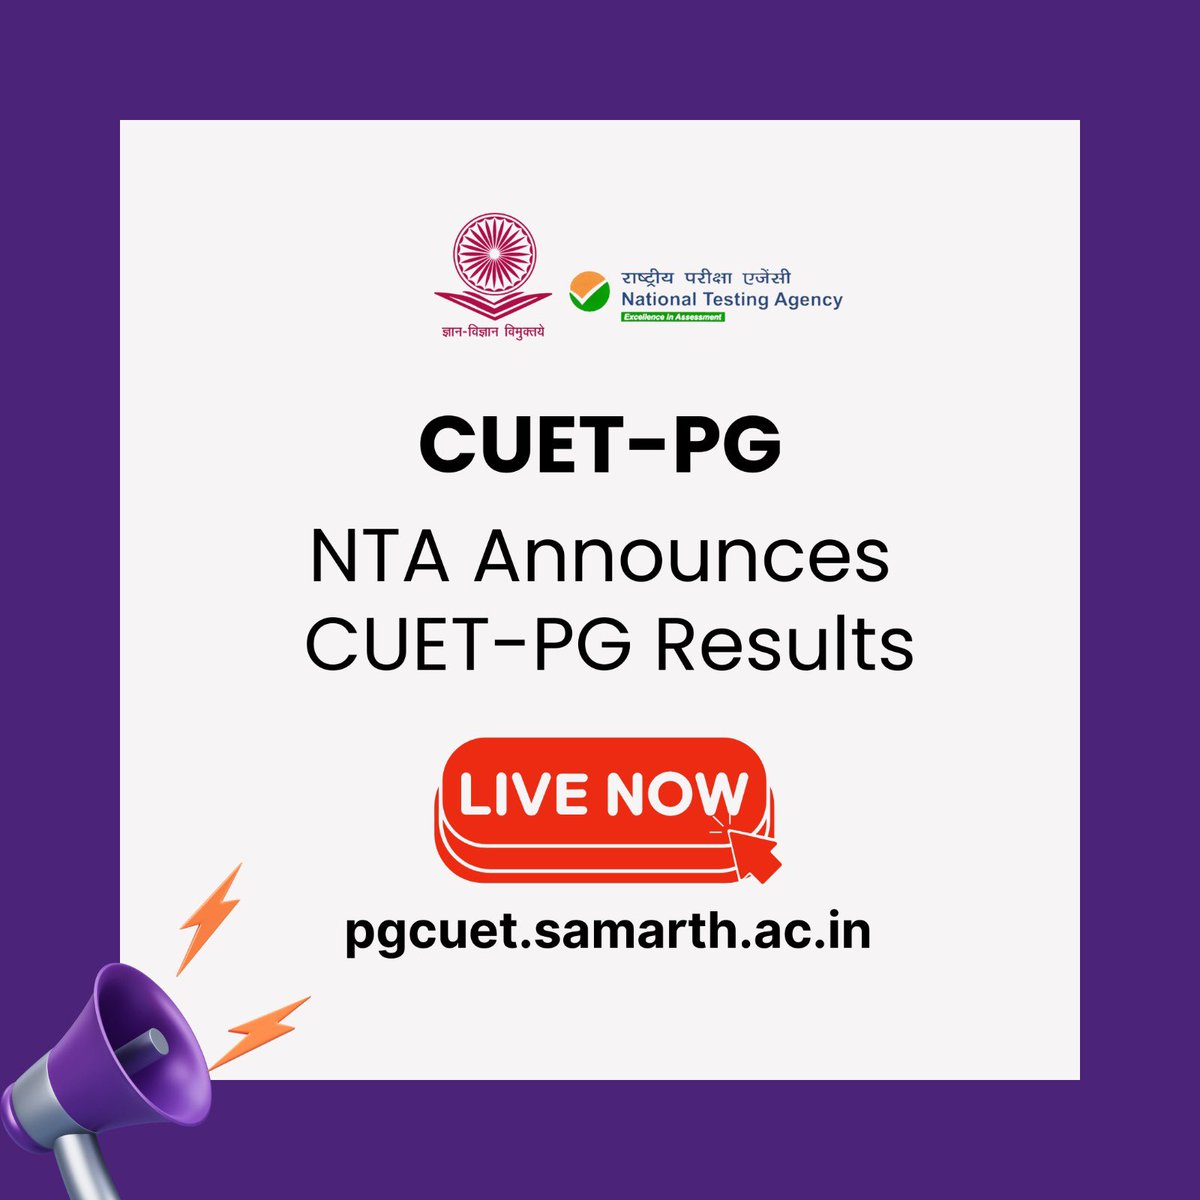 UGC Update: NTA announces CUET-PG results. Check here: pgcuet.samarth.ac.in #UGC #CUETPG